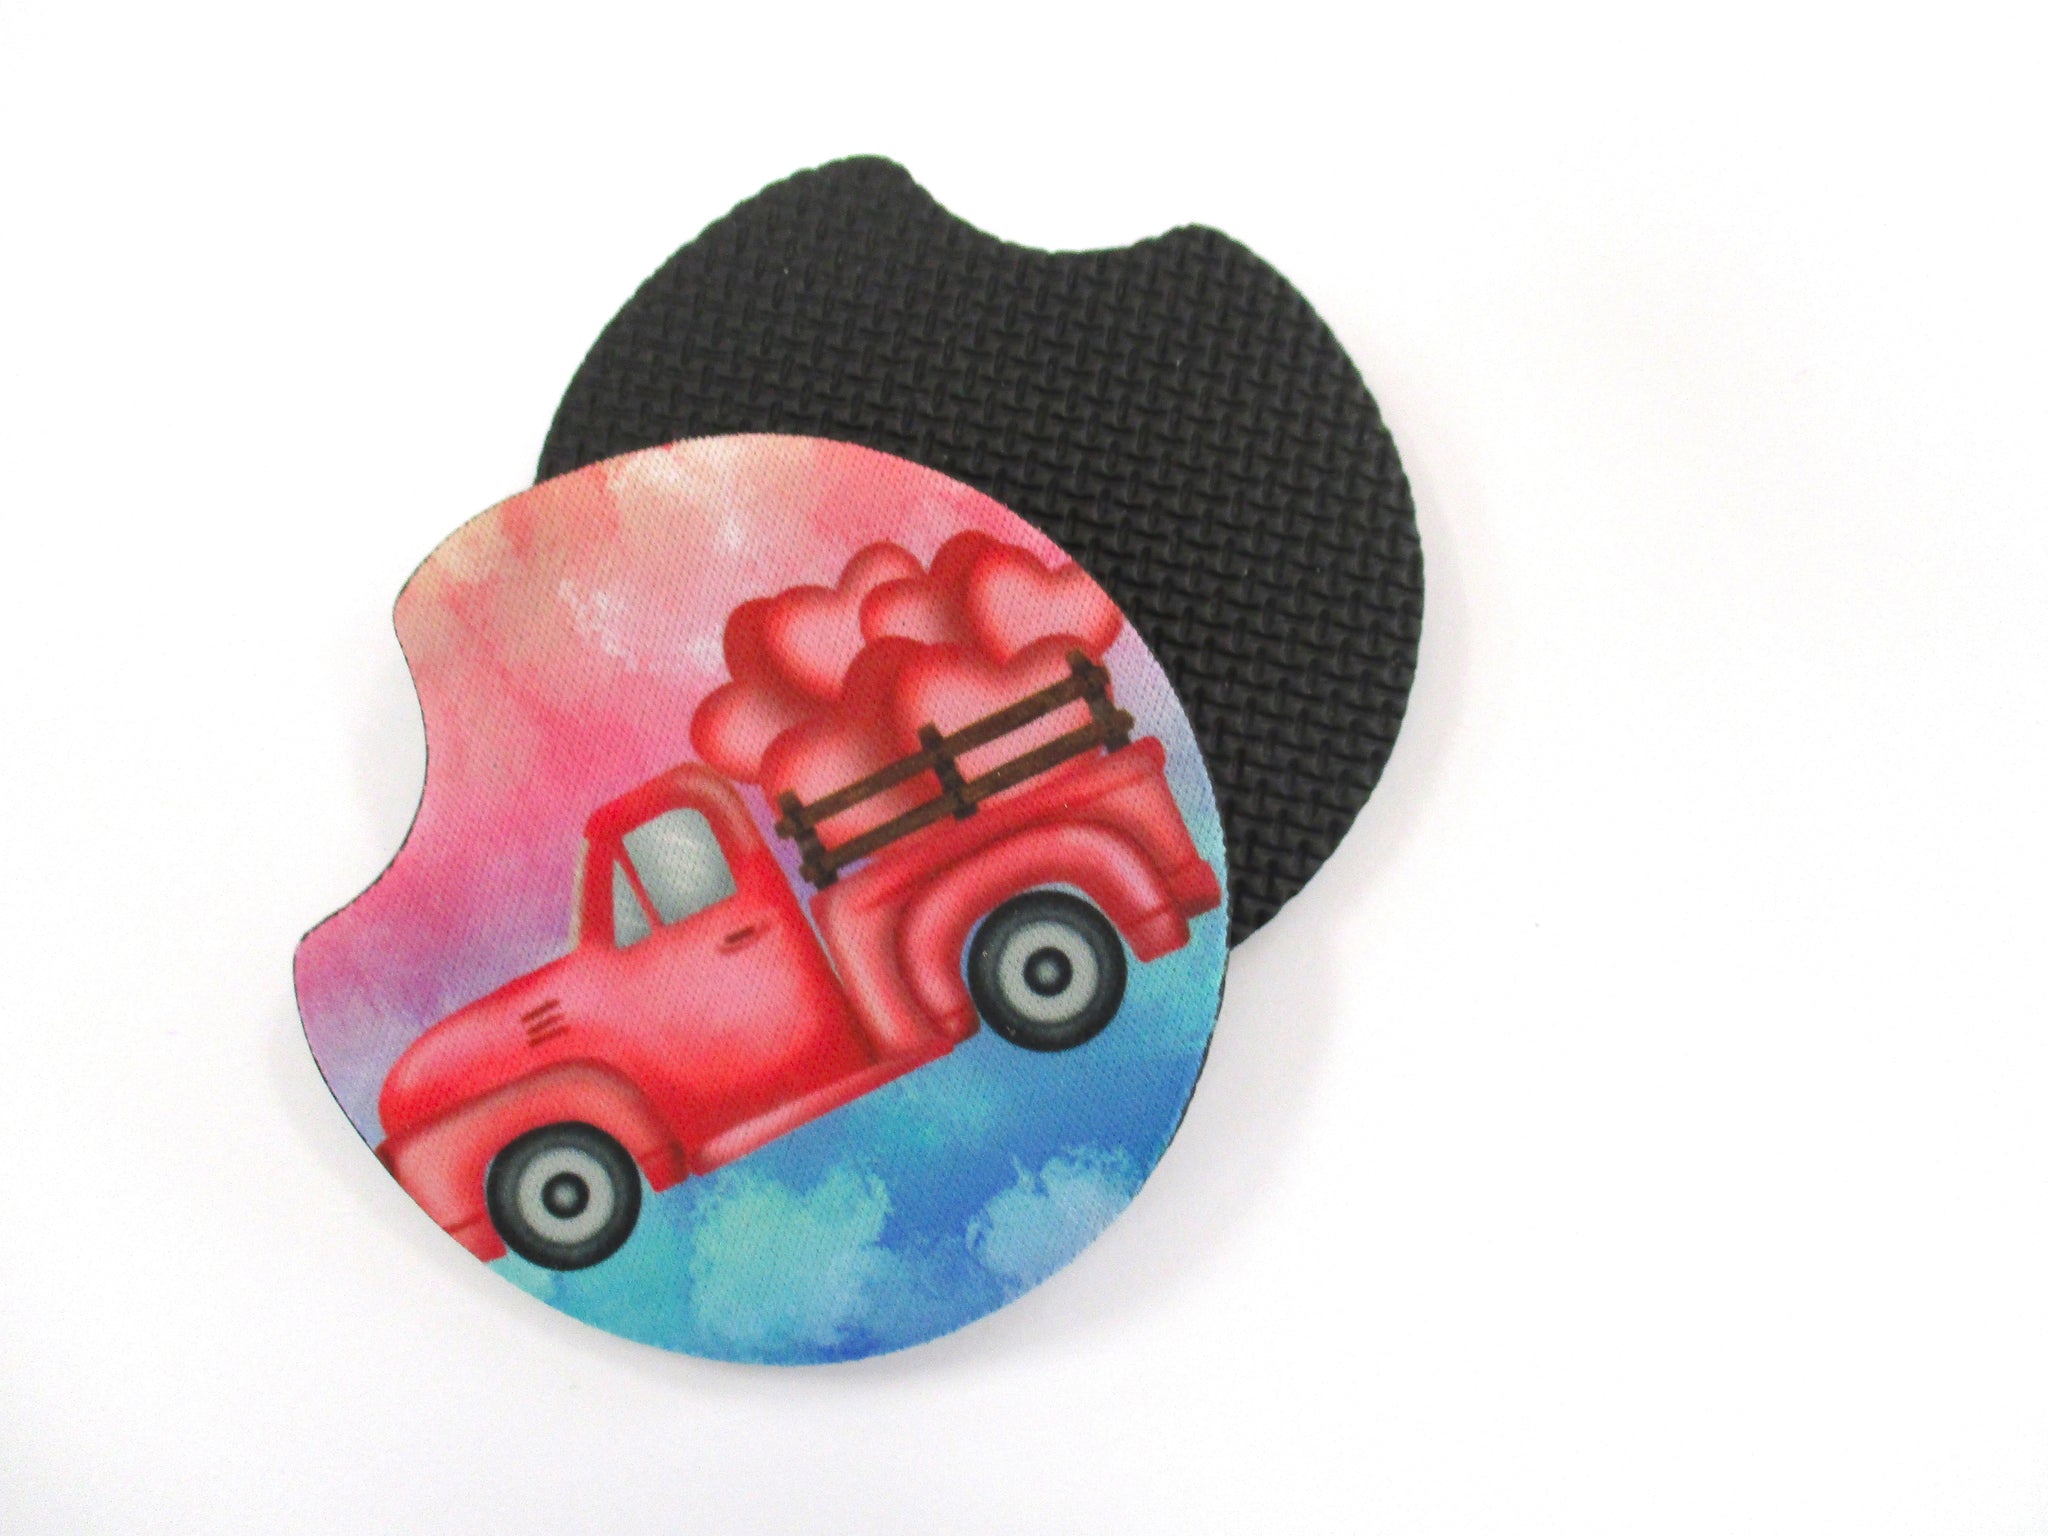 Pack of 2 – 3 inch Neoprene Car Coasters –